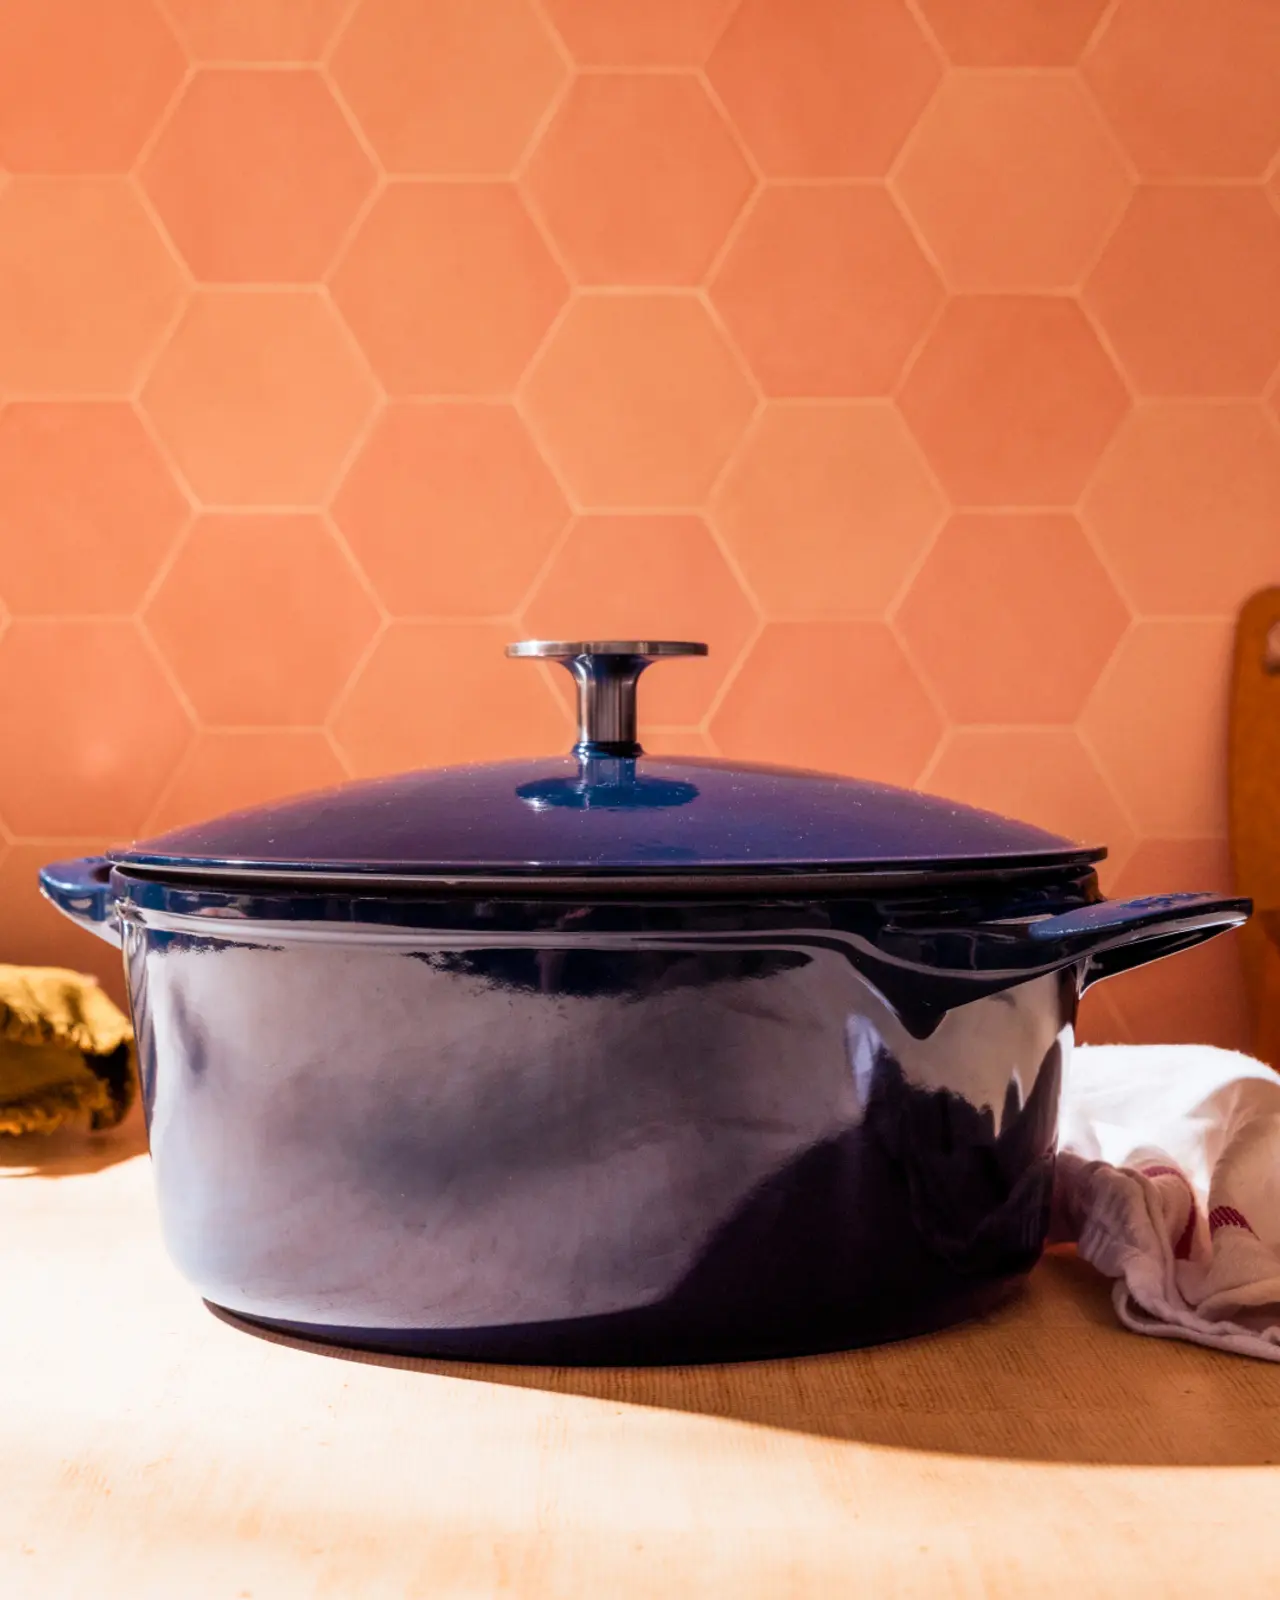 A shiny blue cast iron pot sits on a countertop against a backdrop of orange hexagonal tiles.